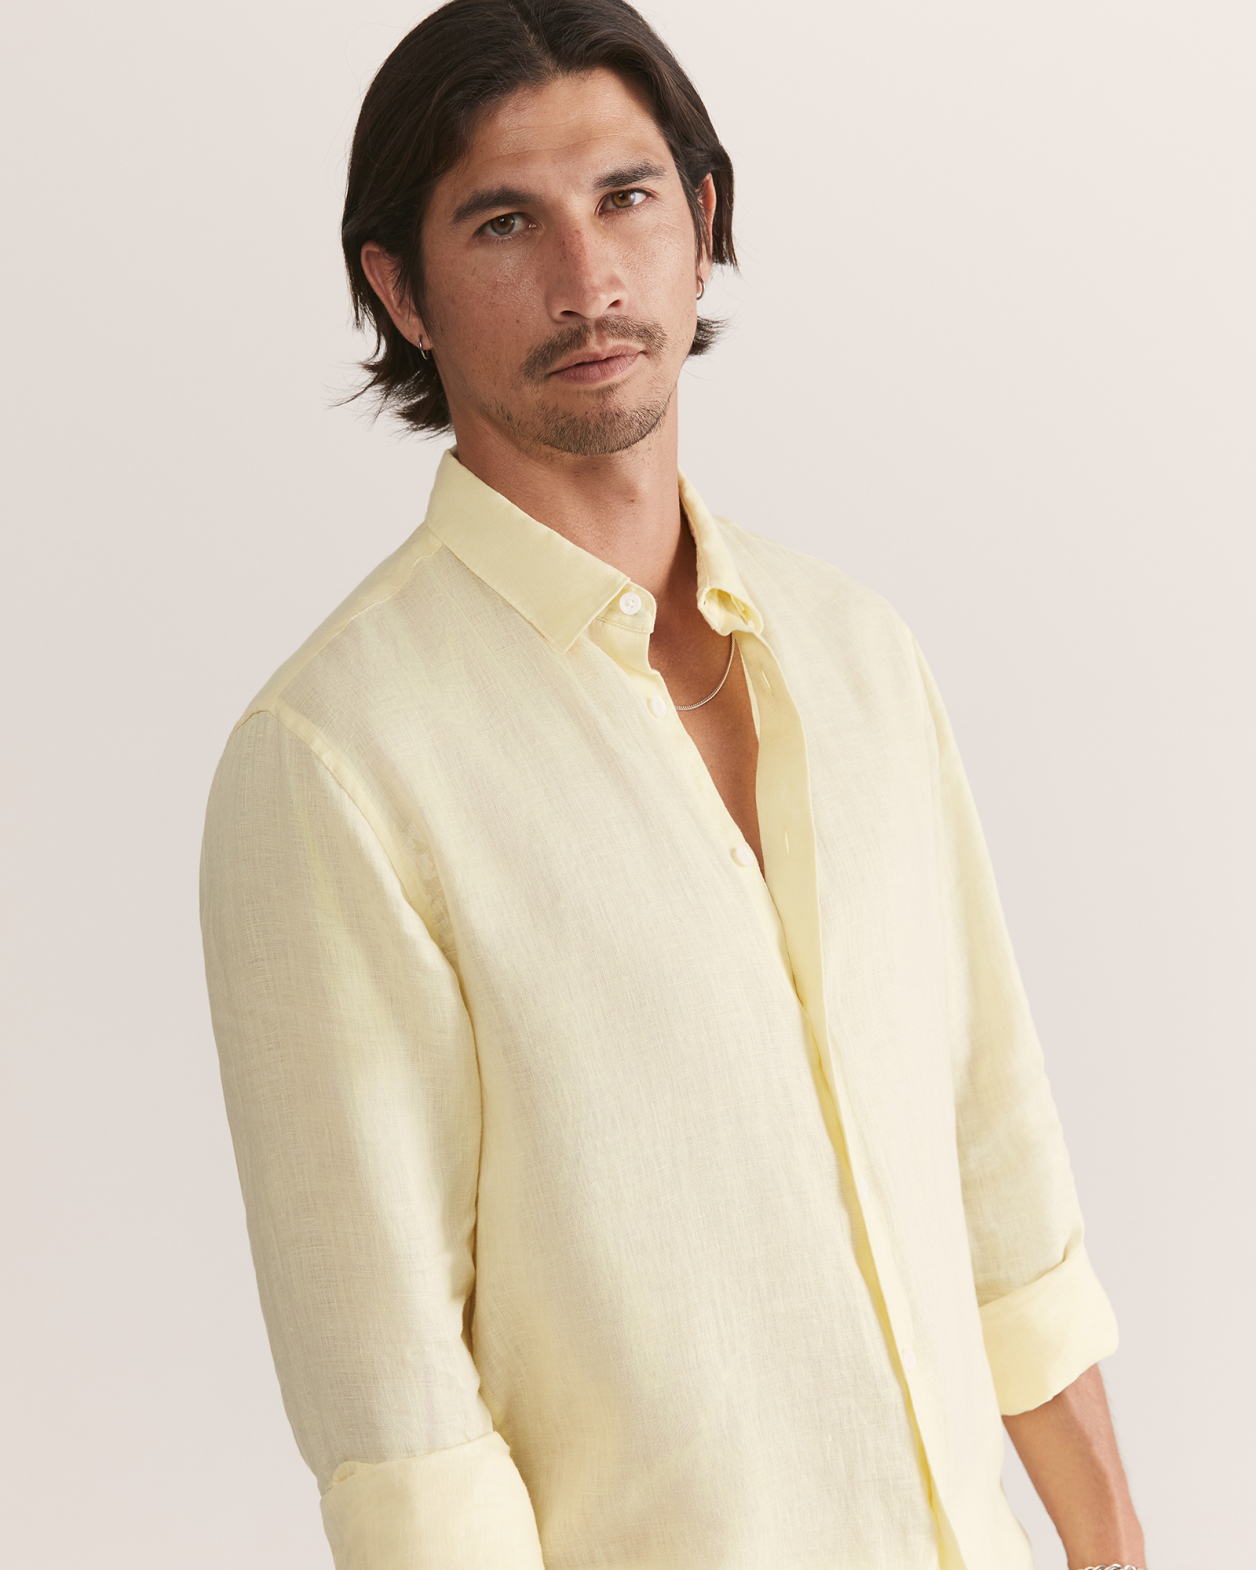 Anderson Long Sleeve Classic Linen Shirt in LEMON